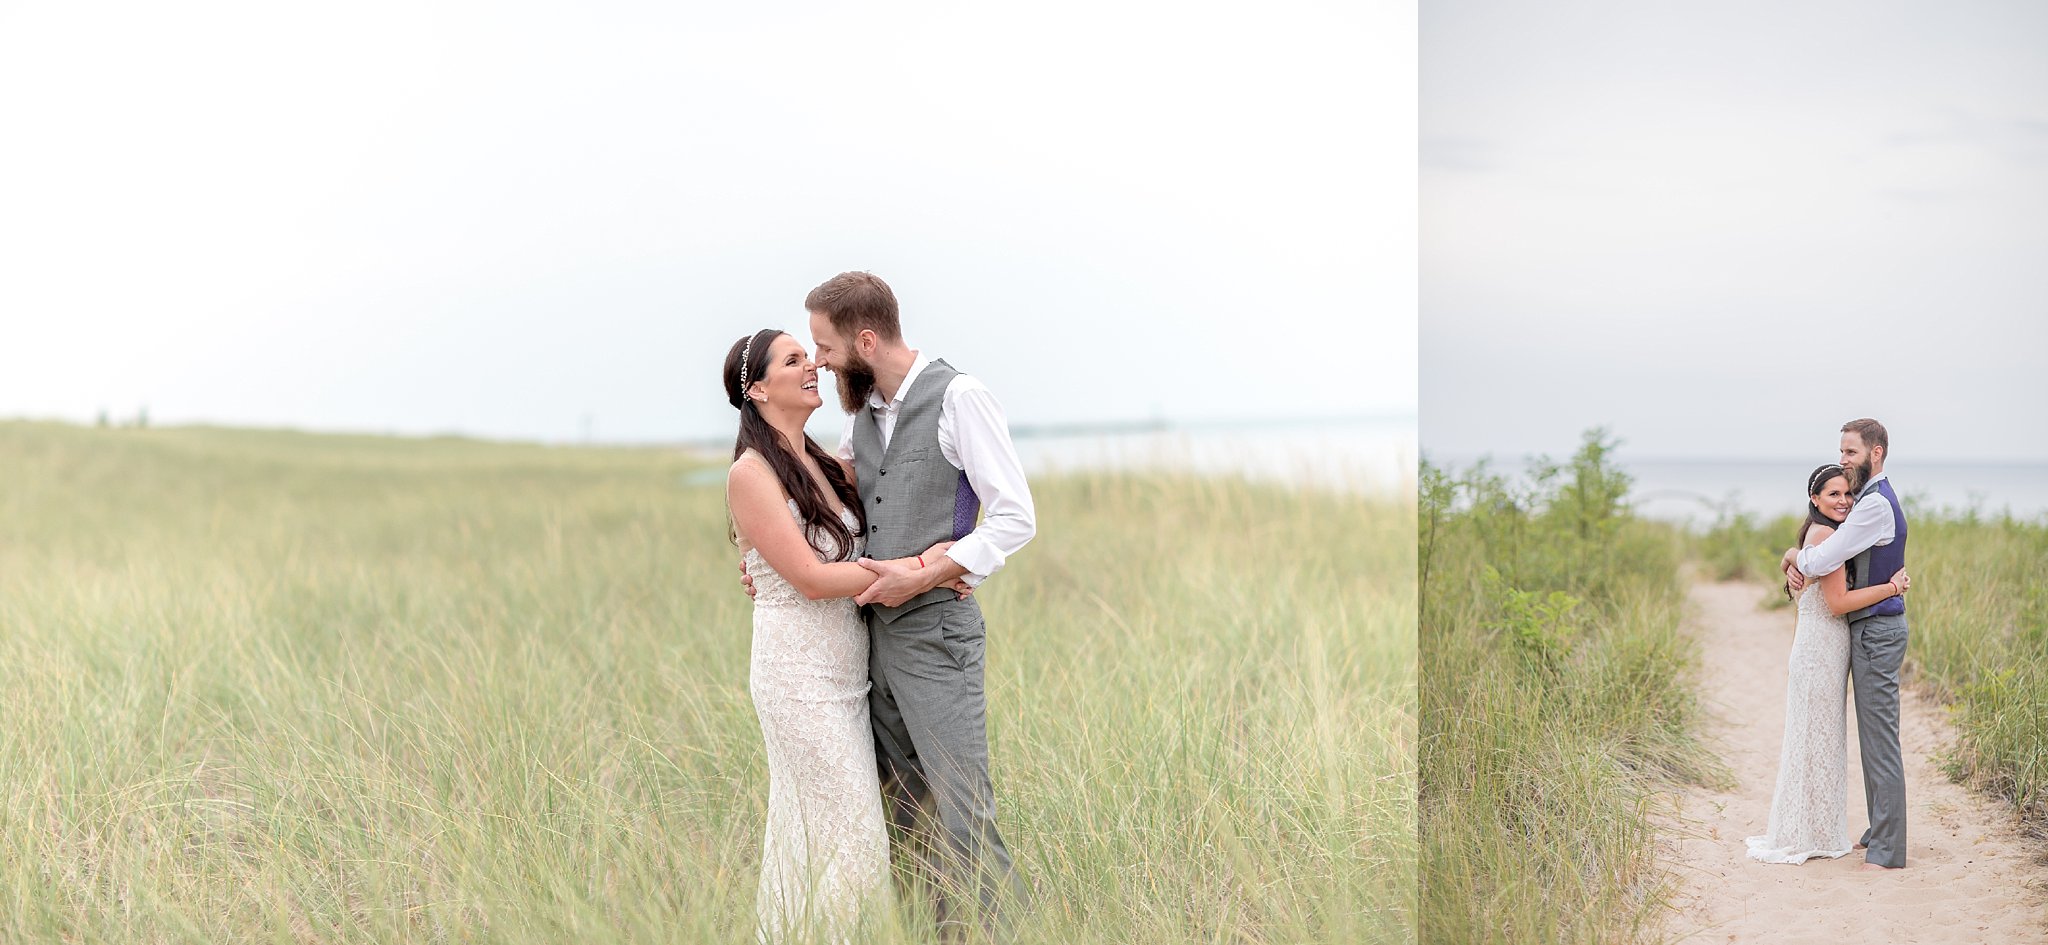 Jonathan + Keli | New Buffalo, MI Private Beach Elopement | Wedding | Toni Jay Photography